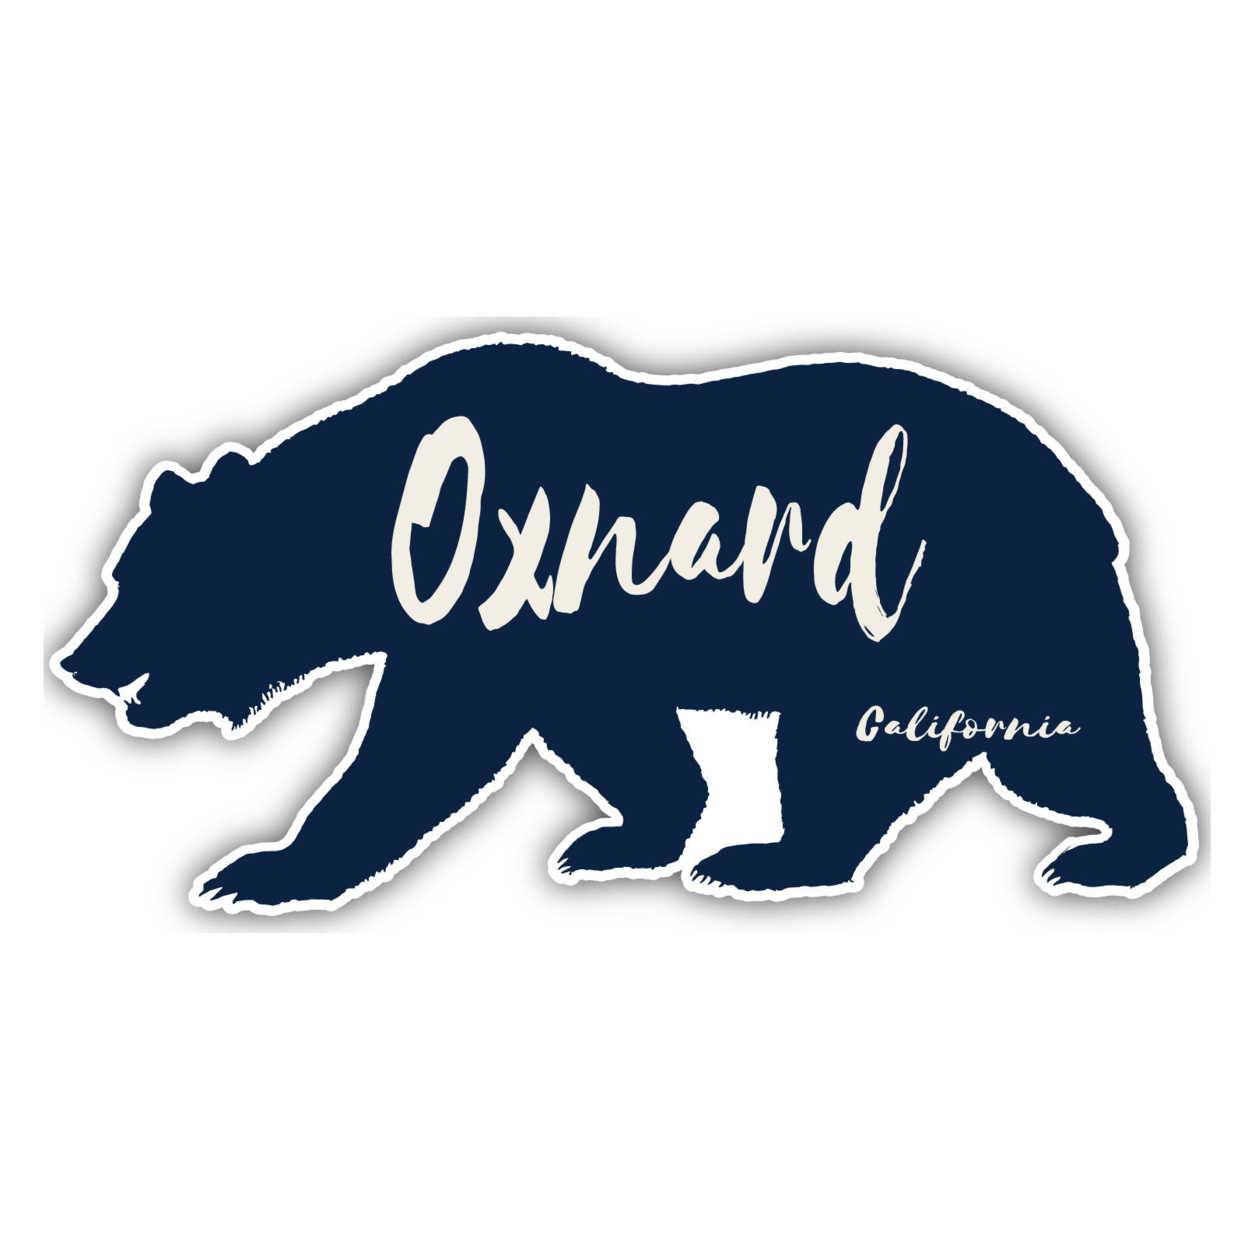 Oxnard California Souvenir Decorative Stickers (Choose Theme And Size) - Single Unit, 4-Inch, Tent